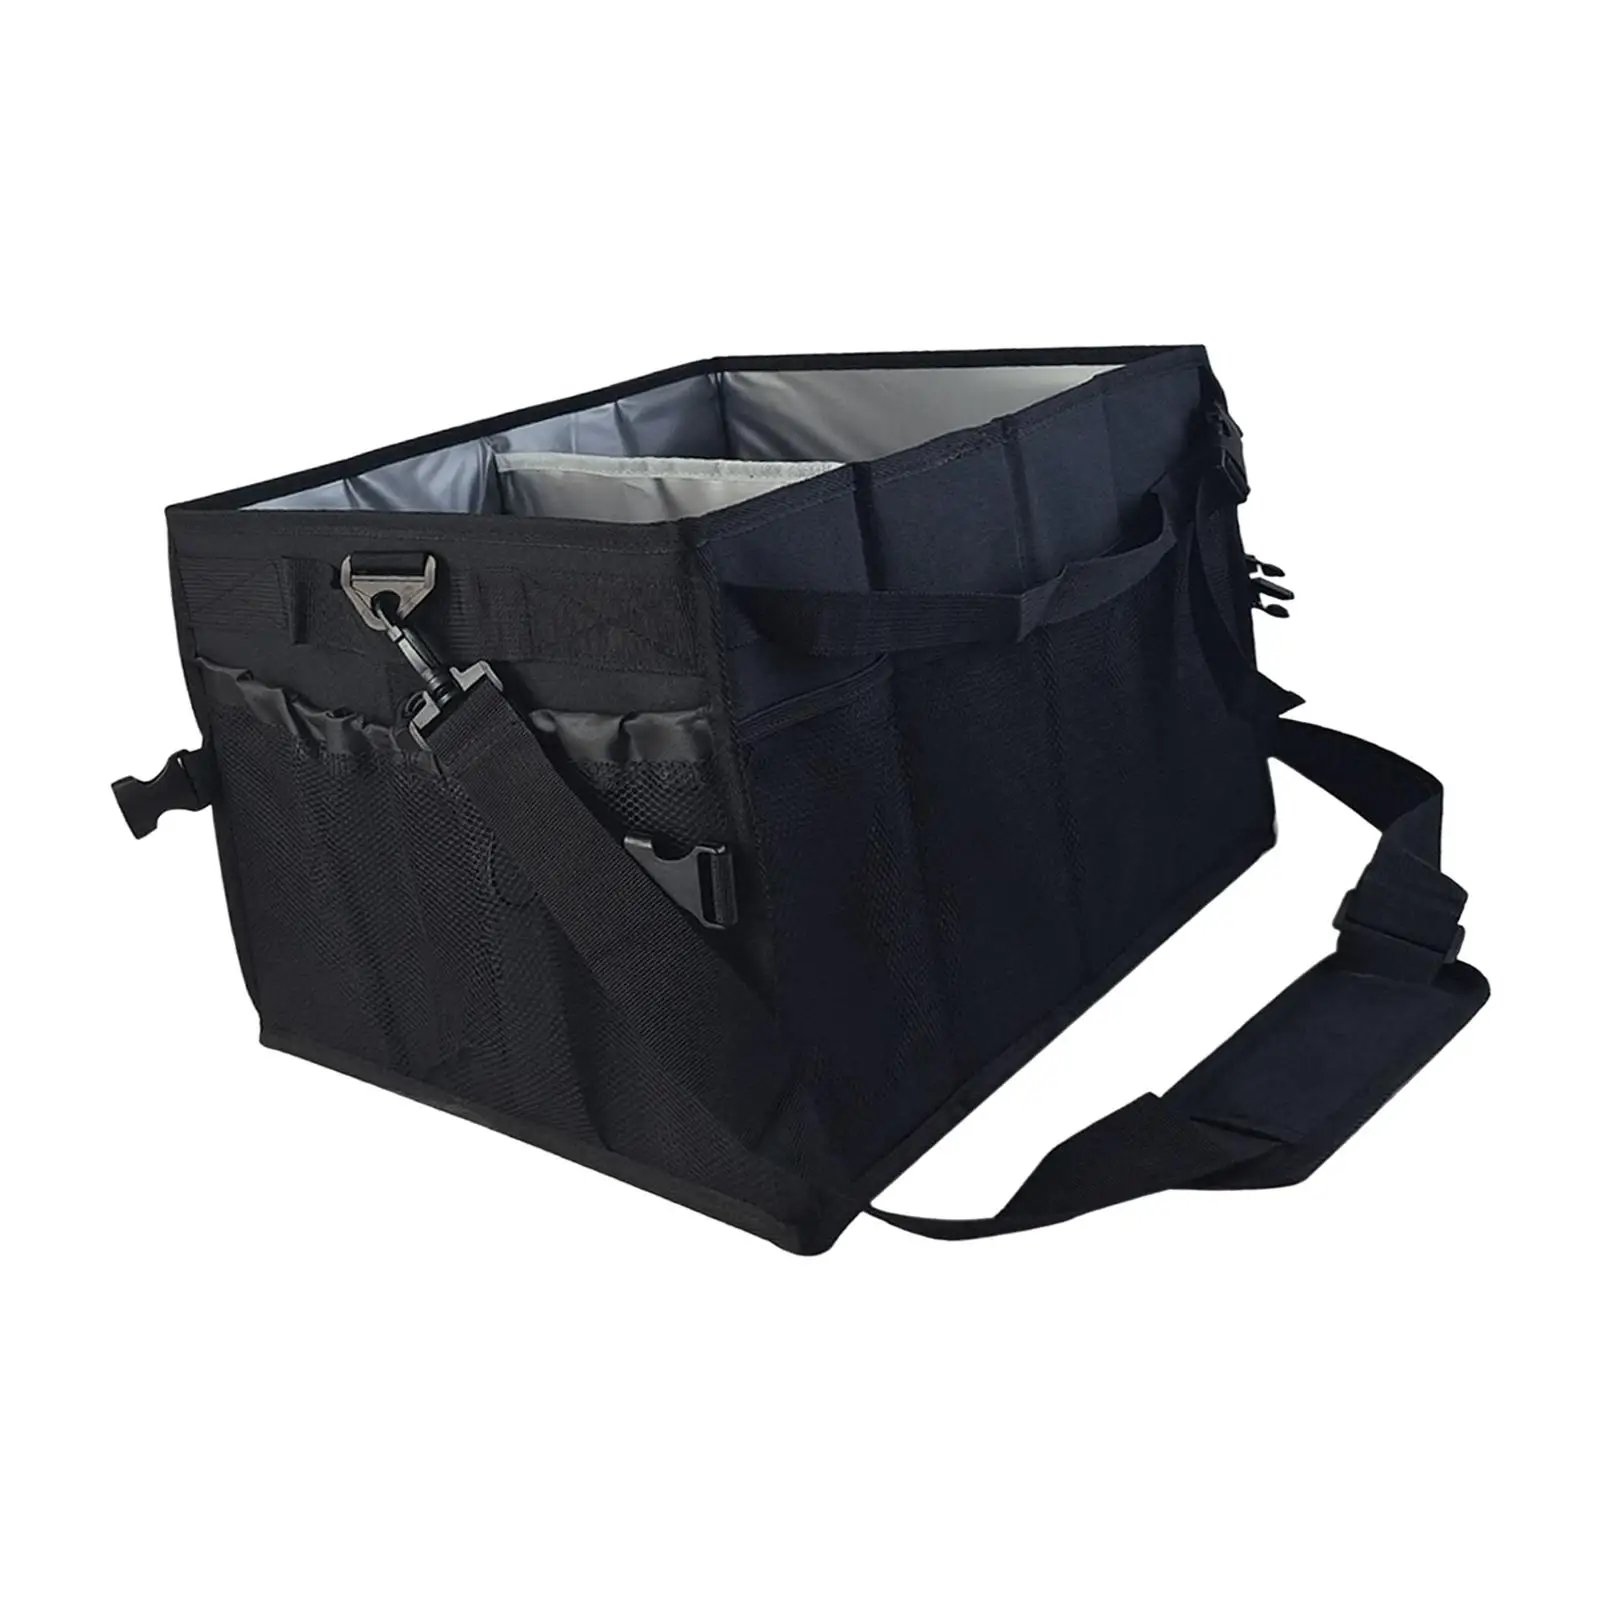 Portable BBQ Tool Storage Bag Grill Tool Carrying Bag Organizer for Picnic Trip